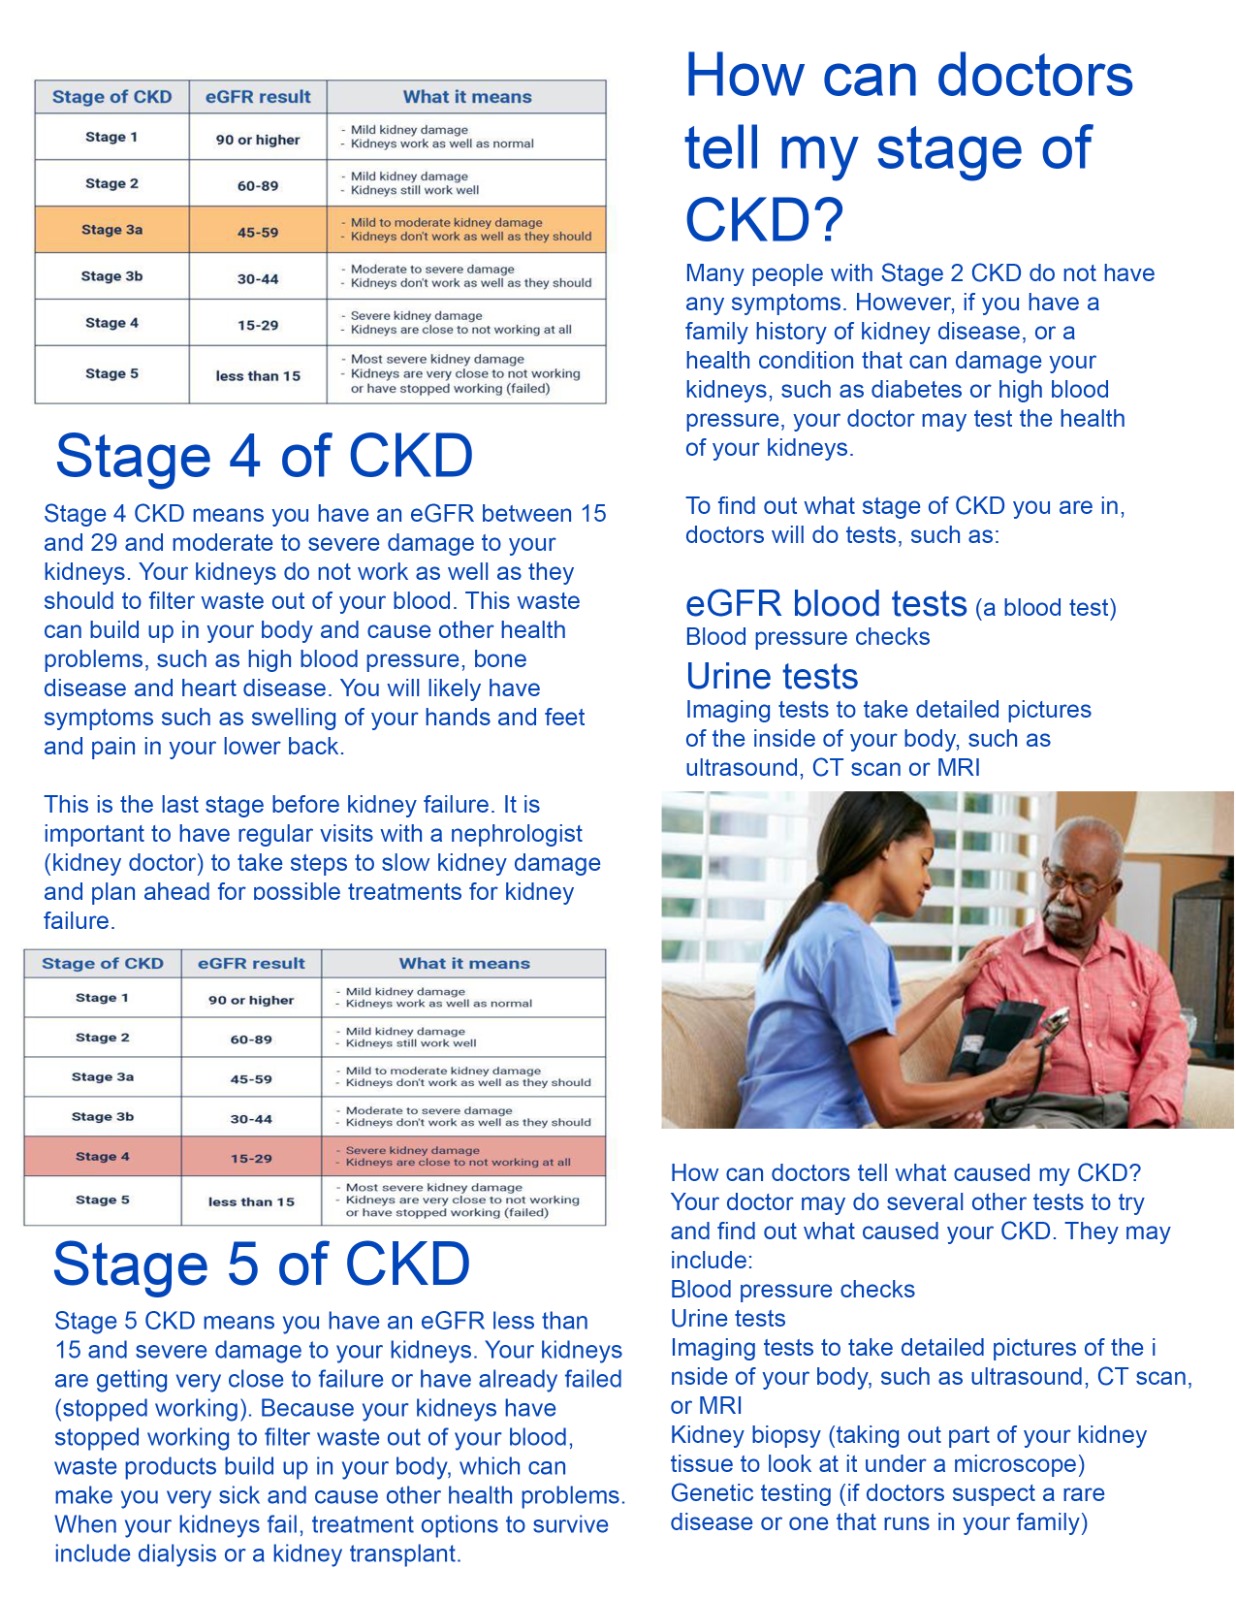 Stages of Kidney Disease